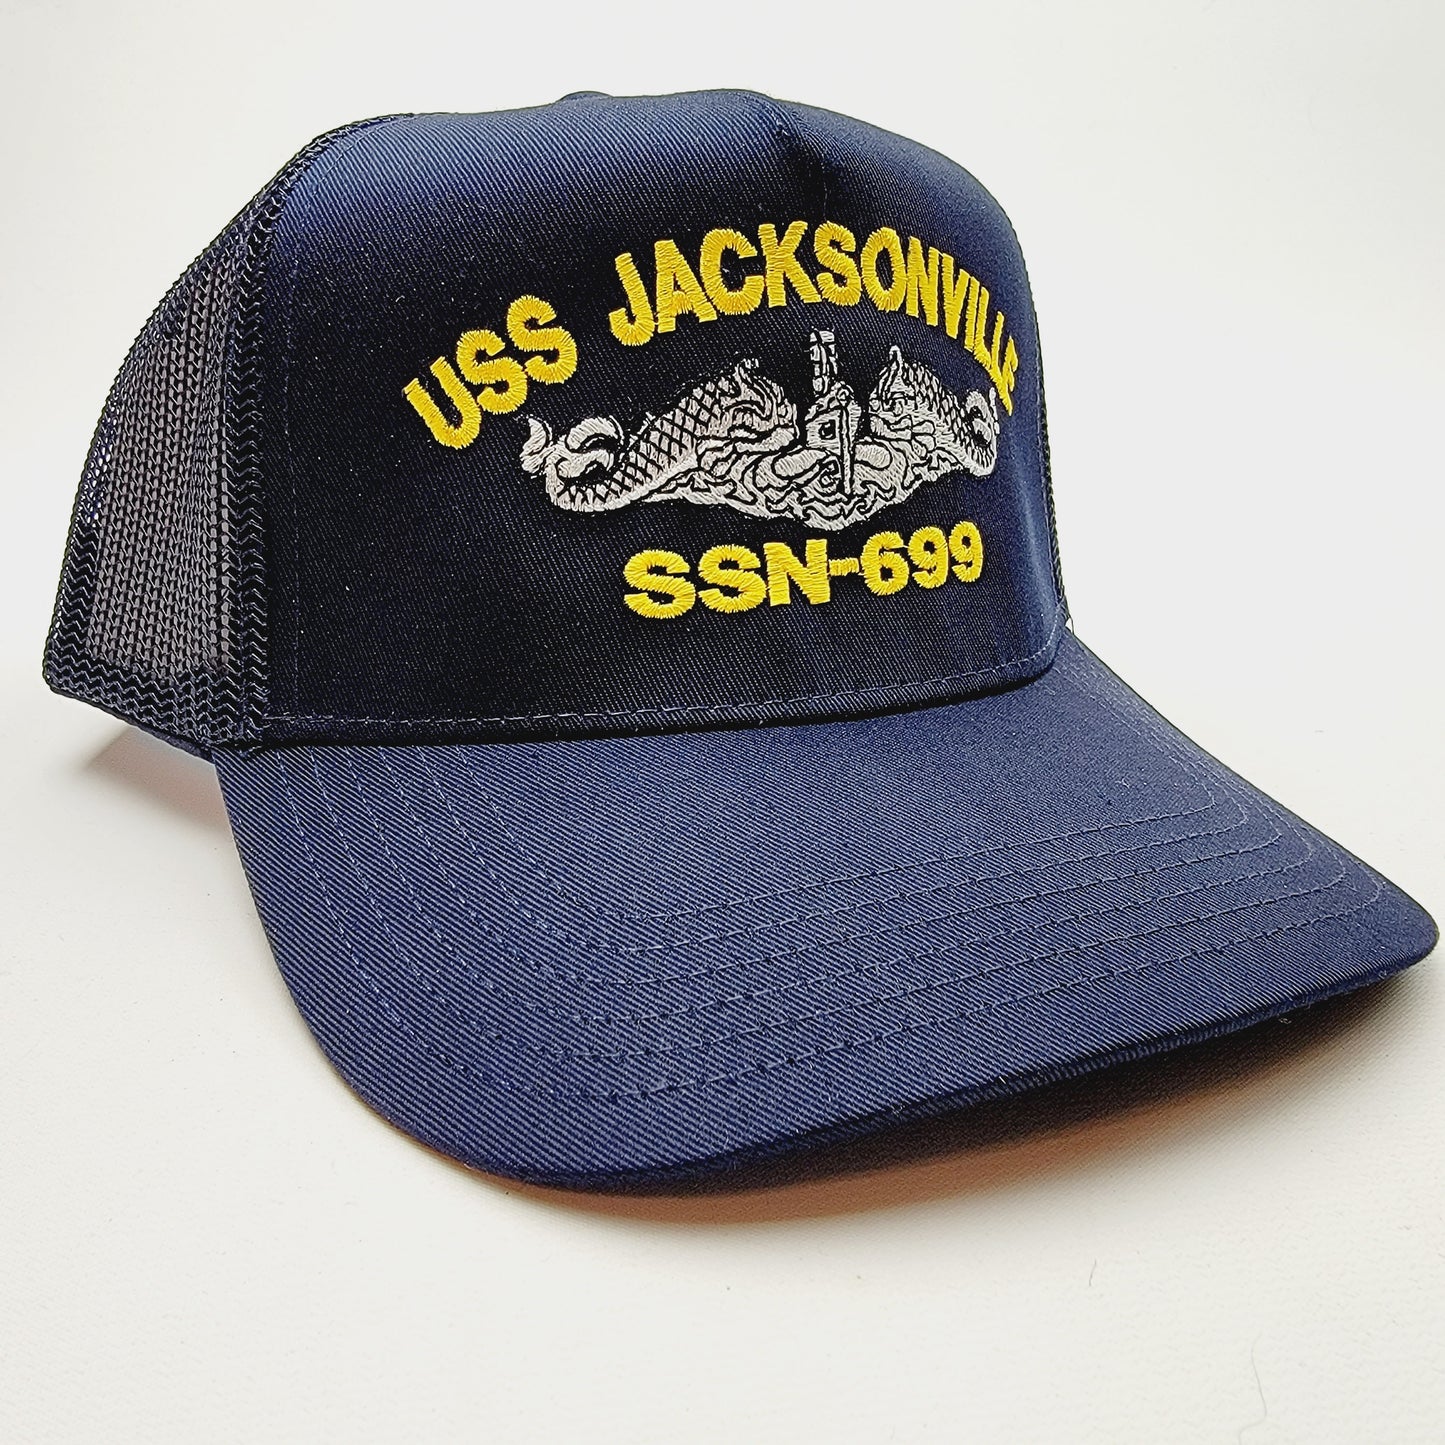 US NAVY USS JACKSONVILLE SSN-699 Embroidered Hat Baseball Cap Adjustable Blue